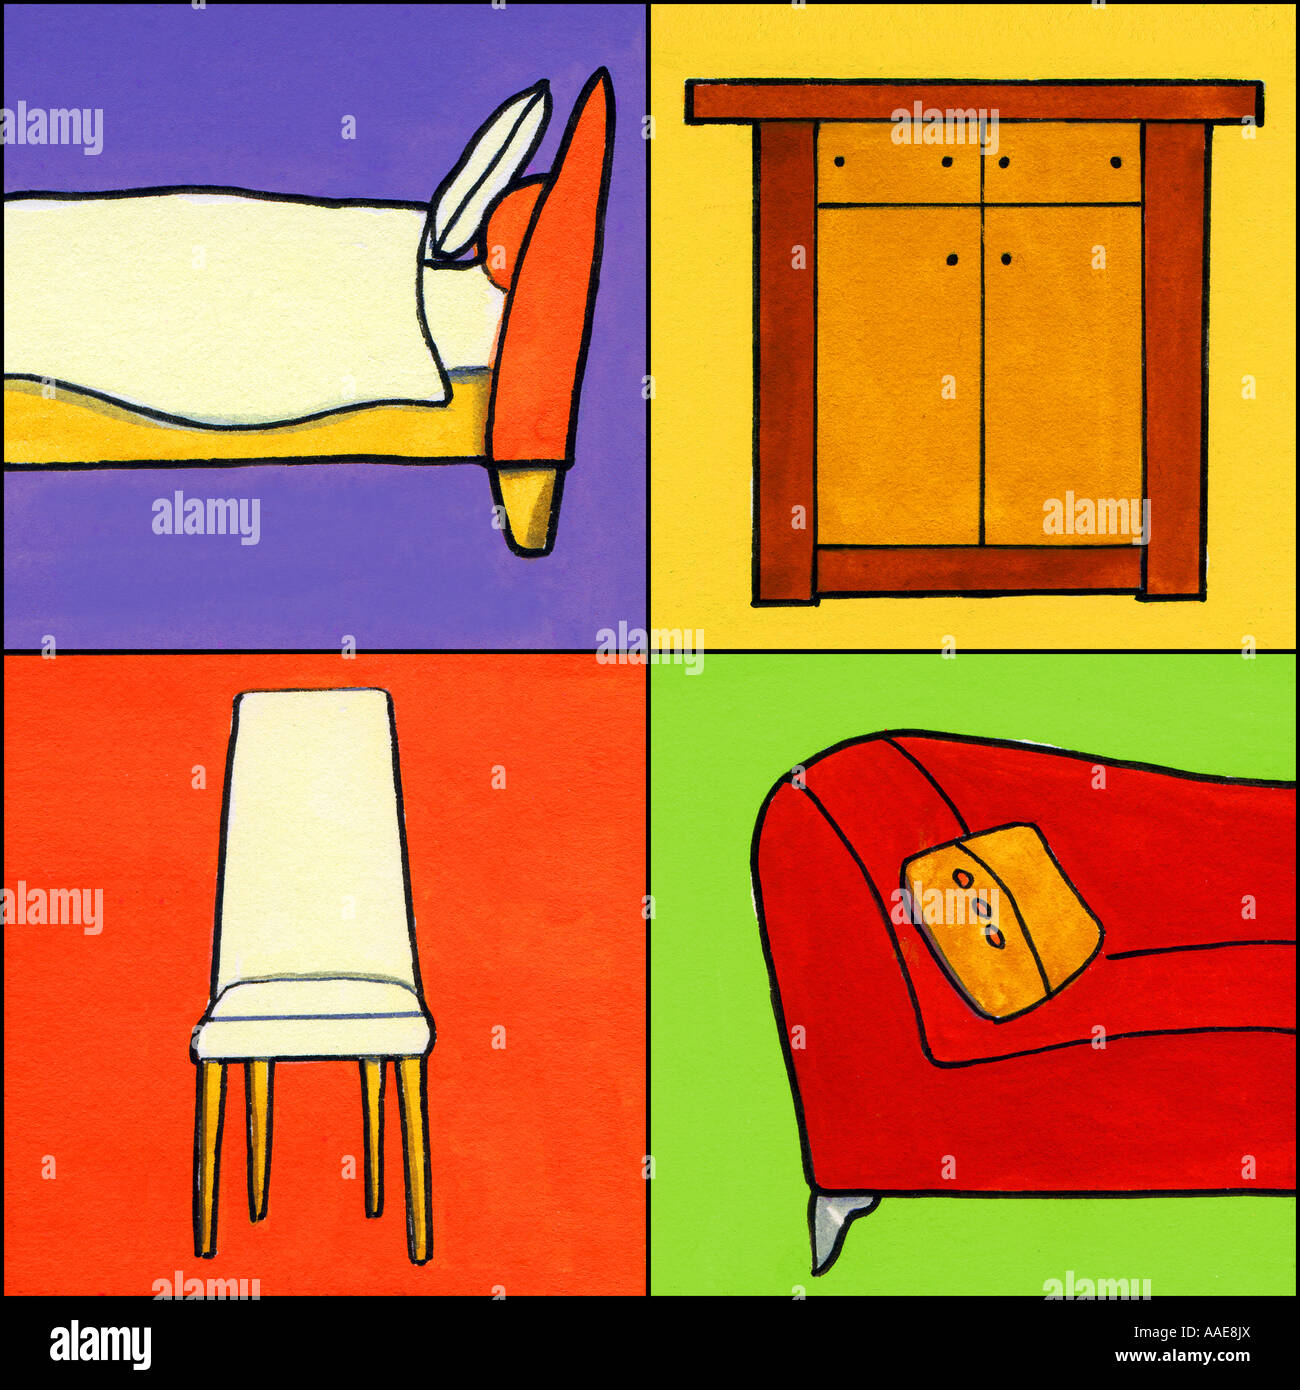 Home furnishings illustration Stock Photo